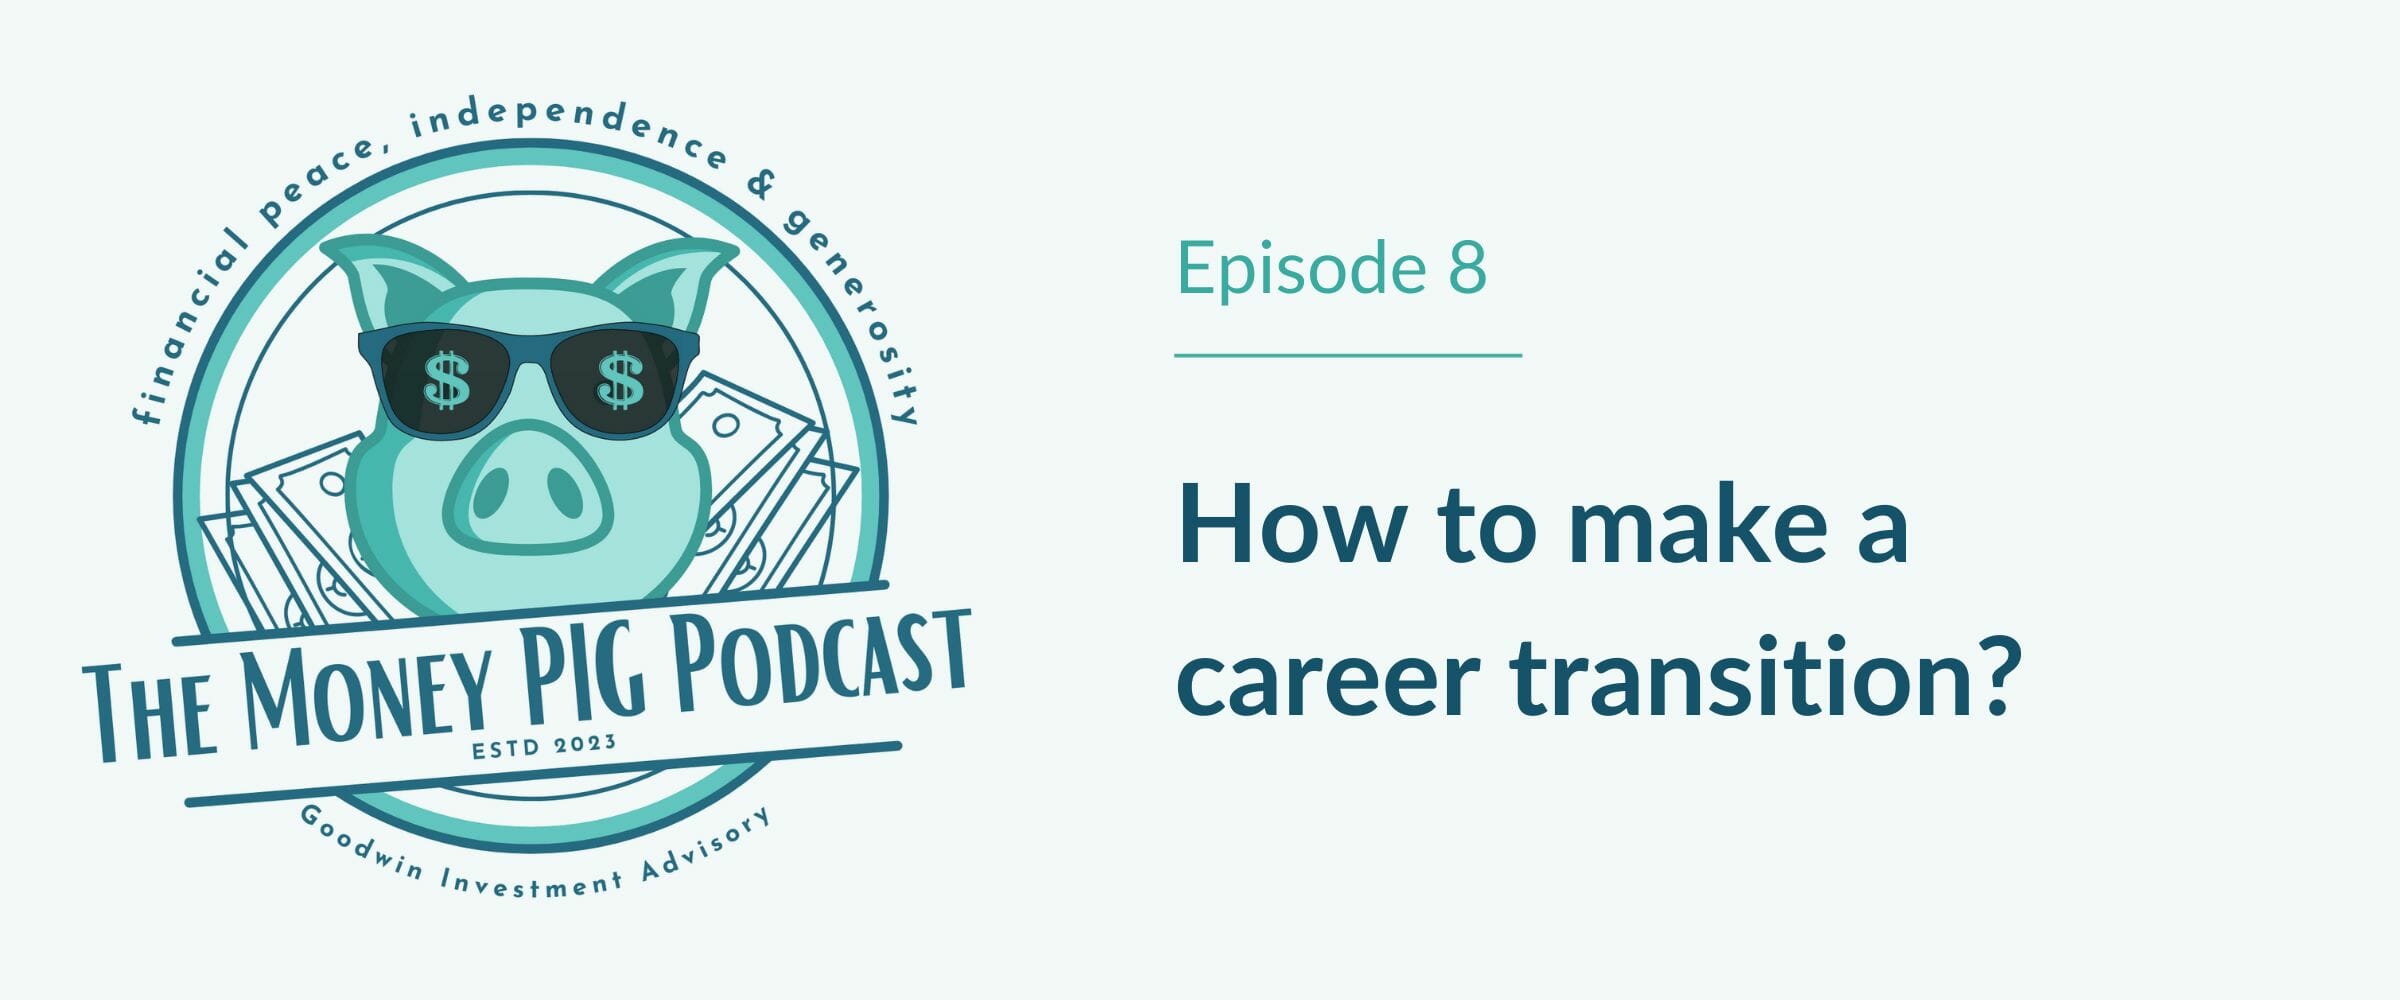 How do you change careers?